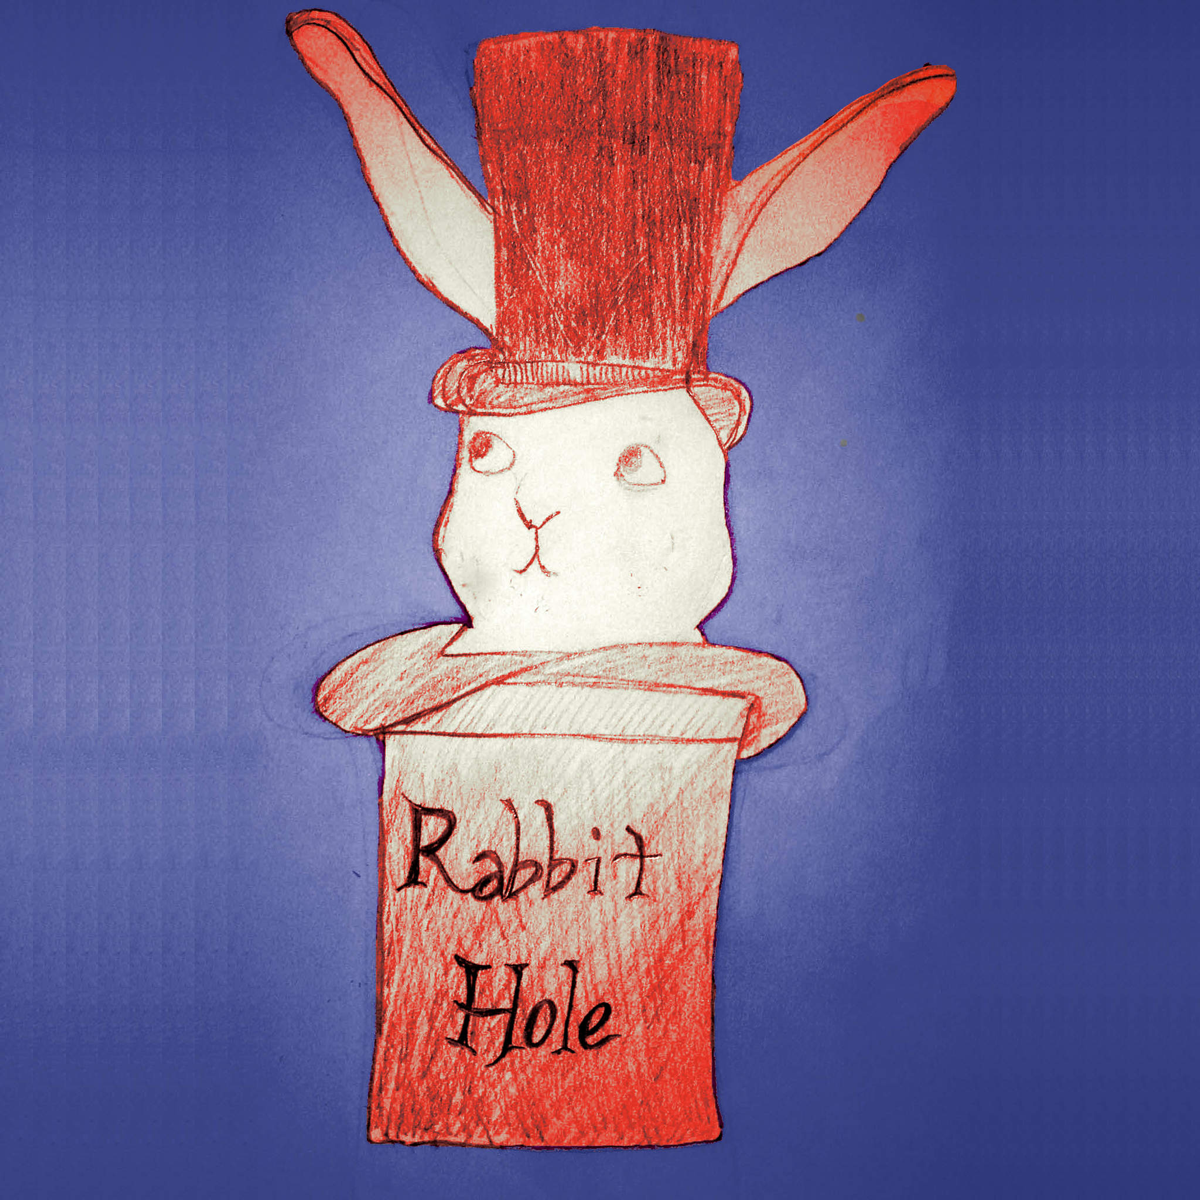 Ребит хол. Rabbit hole. The Rabbit hole картинки. Кролик и дыра. Аватарка Rabbit hole.